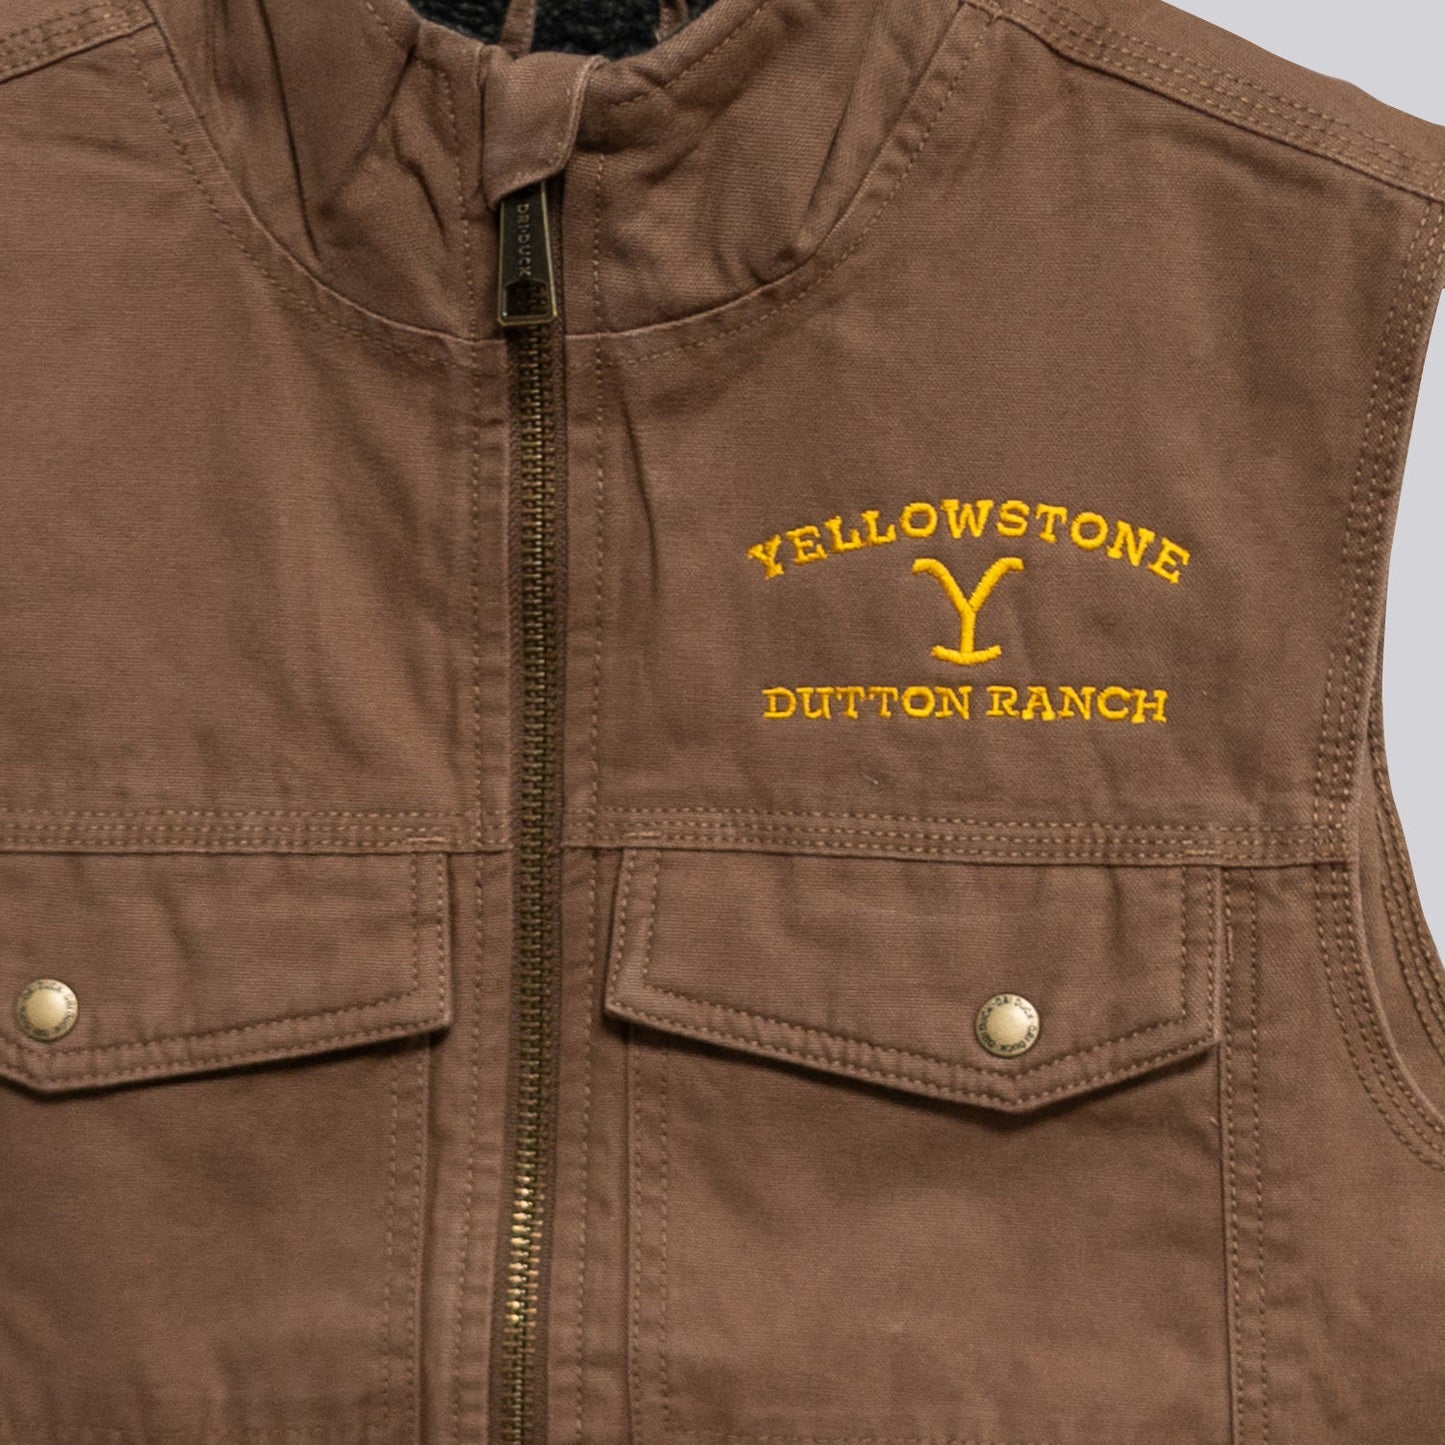 Yellowstone Dutton Ranch Logo Brown Cloth Vest - Paramount Shop